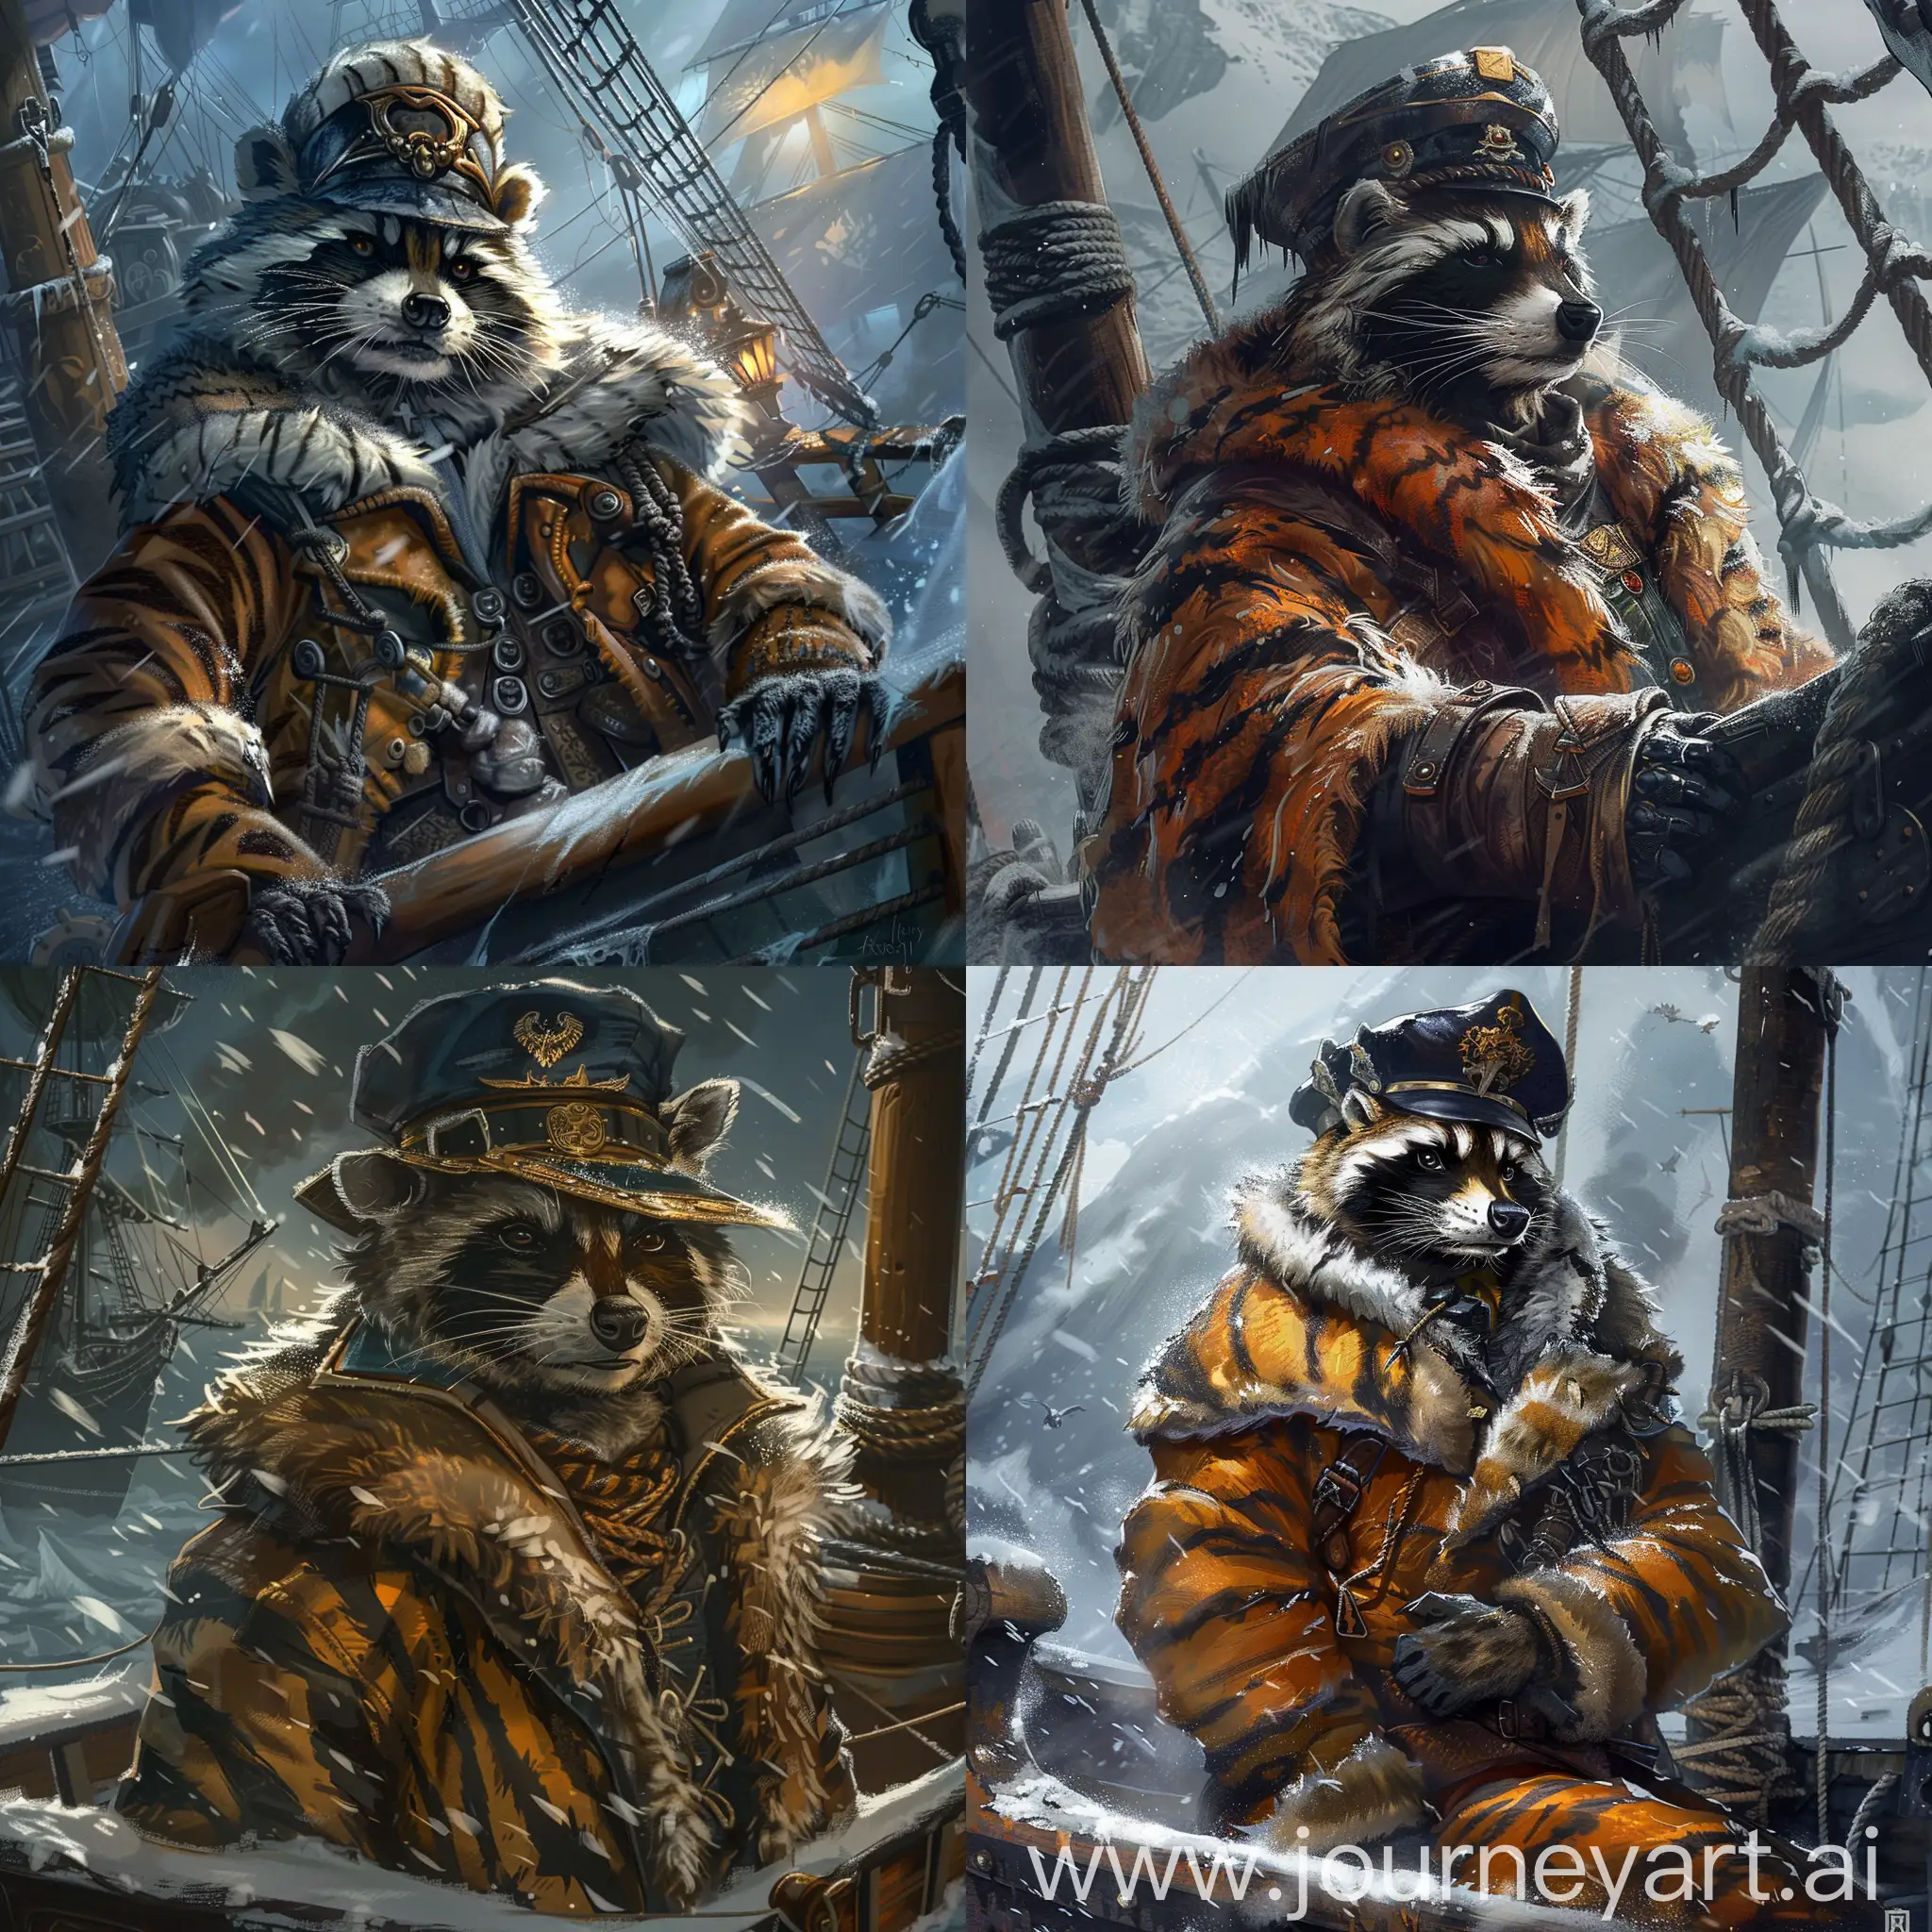 Енот - капитан на севере мёрзнет на корабле накинув шкуру тигра и капитанскую шляпу, Фростпанк арт